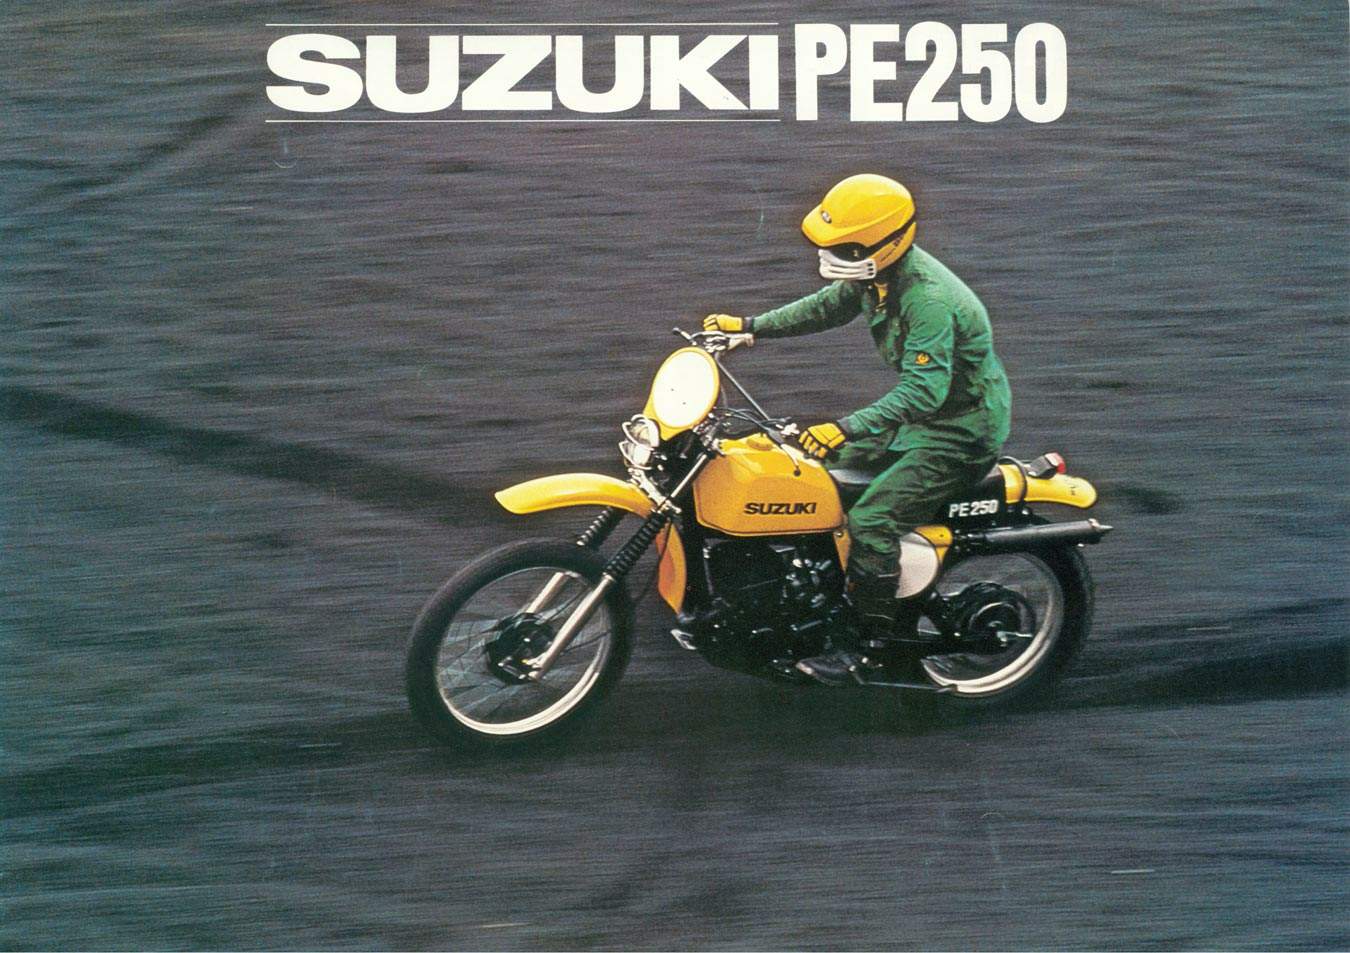 Suzuki PE 250 technical specifications